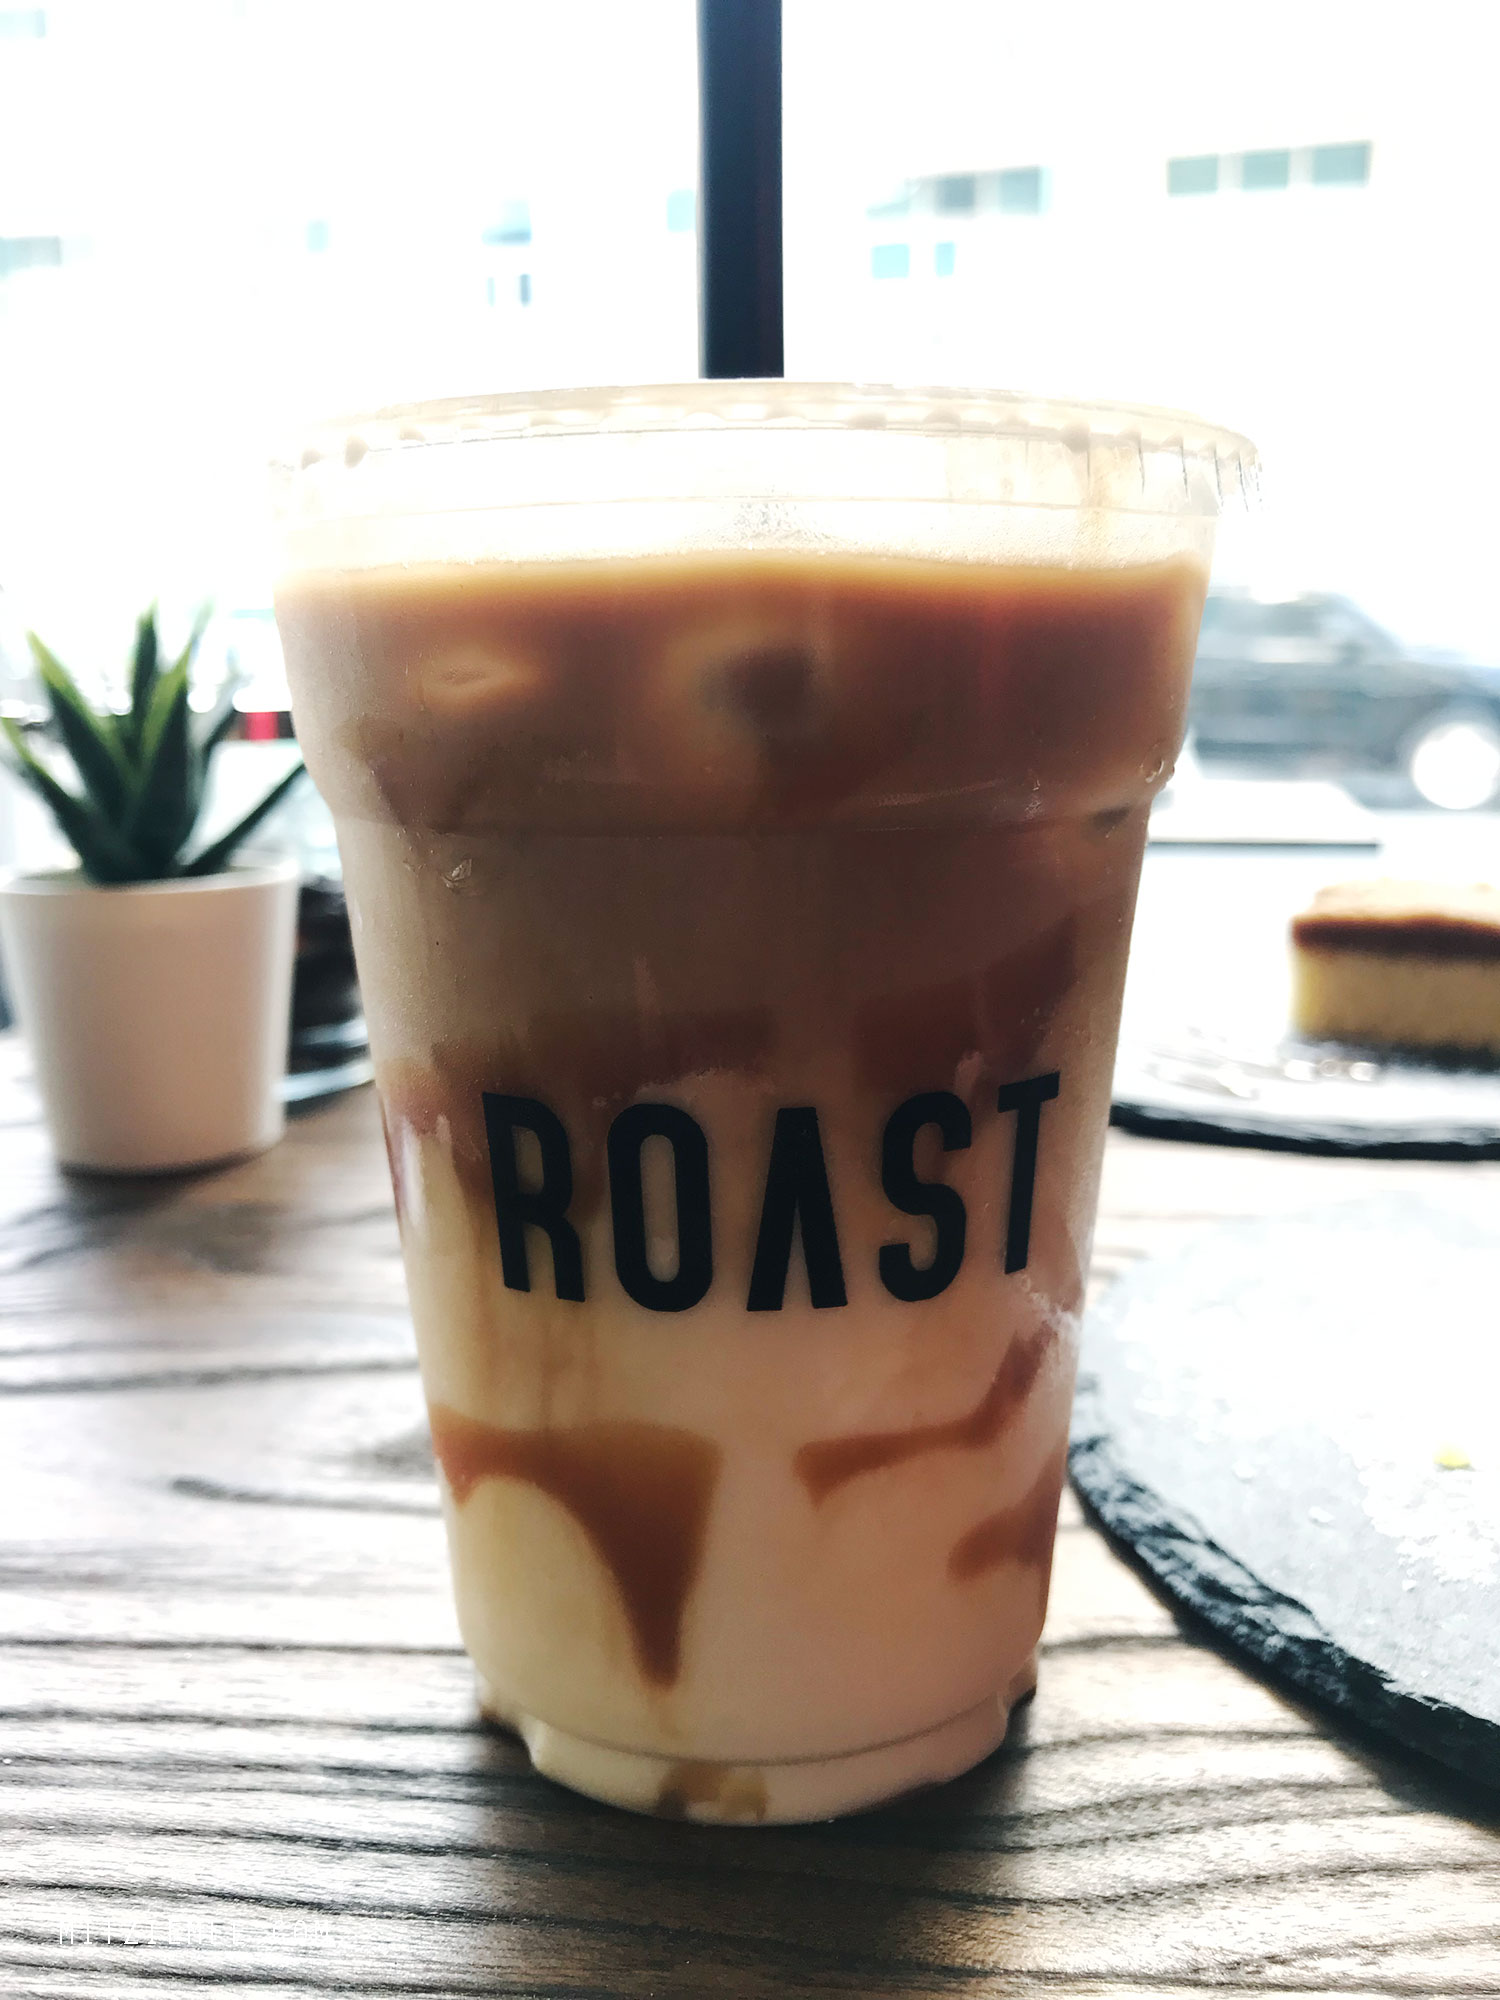 Roast, Danish Cafe, Dubai Marina